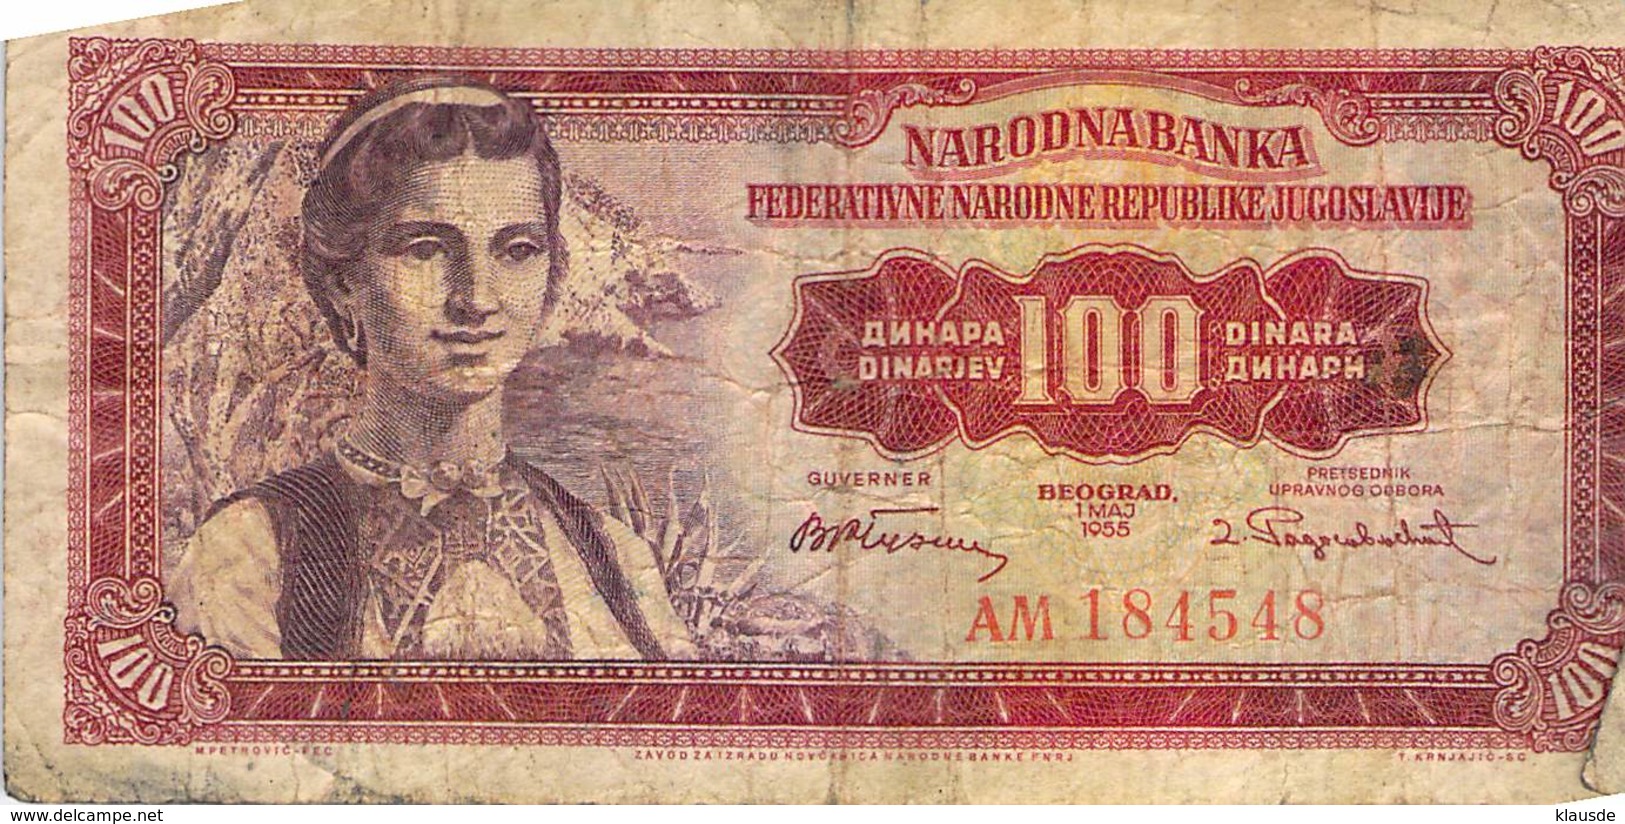 100 Dinar Banknote Jugoslawien 1955 VG/G (IV) - Jugoslawien